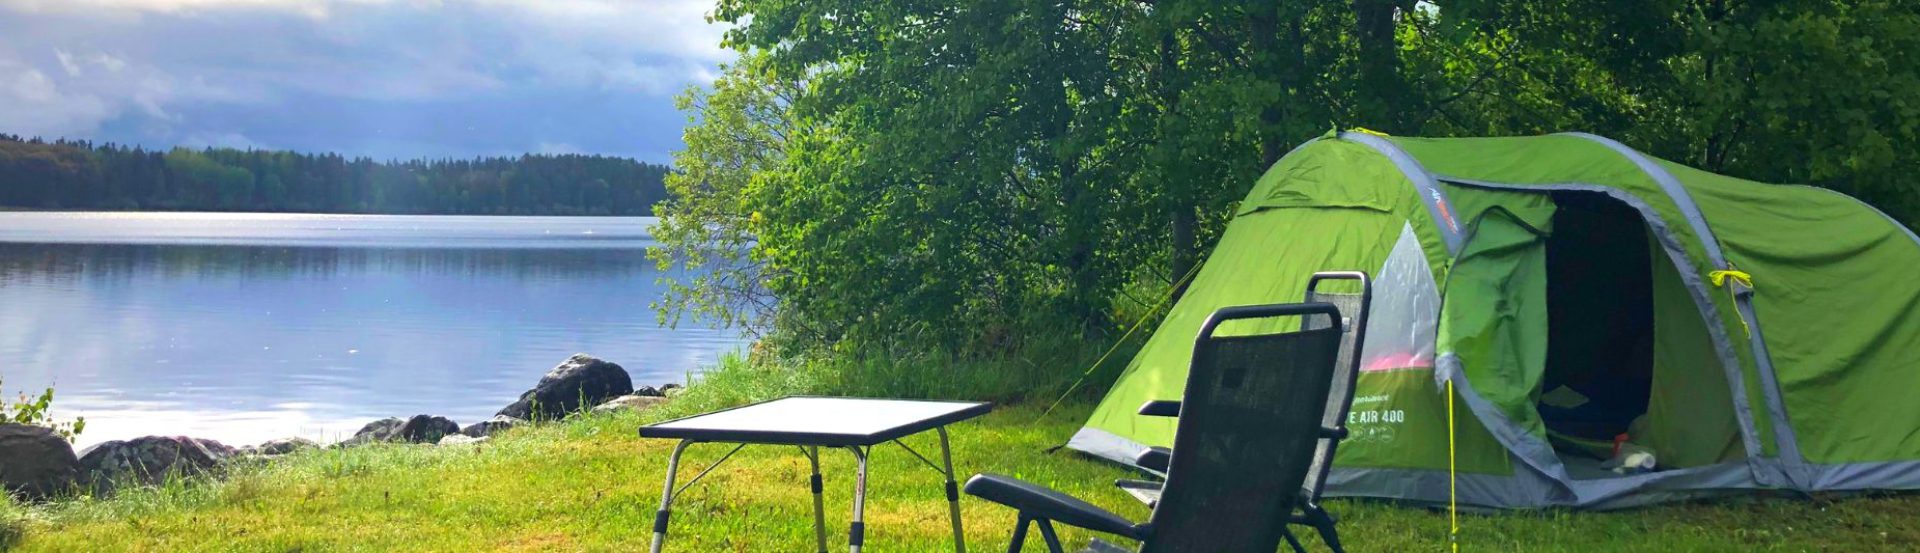 Camping Falkudden ervaring zweden